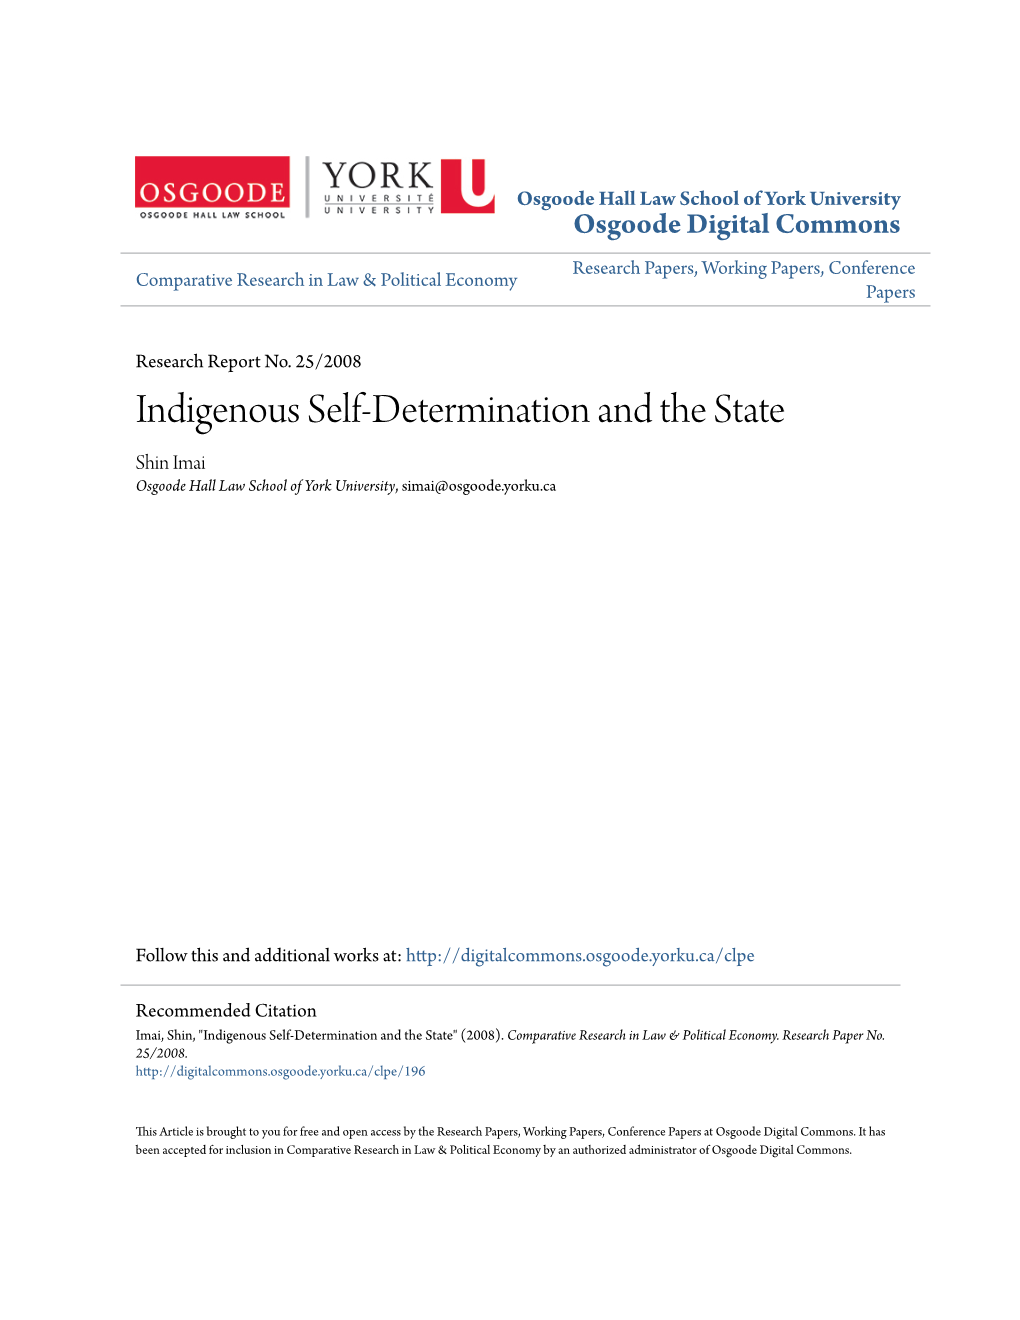 Indigenous Self-Determination and the State Shin Imai Osgoode Hall Law School of York University, Simai@Osgoode.Yorku.Ca